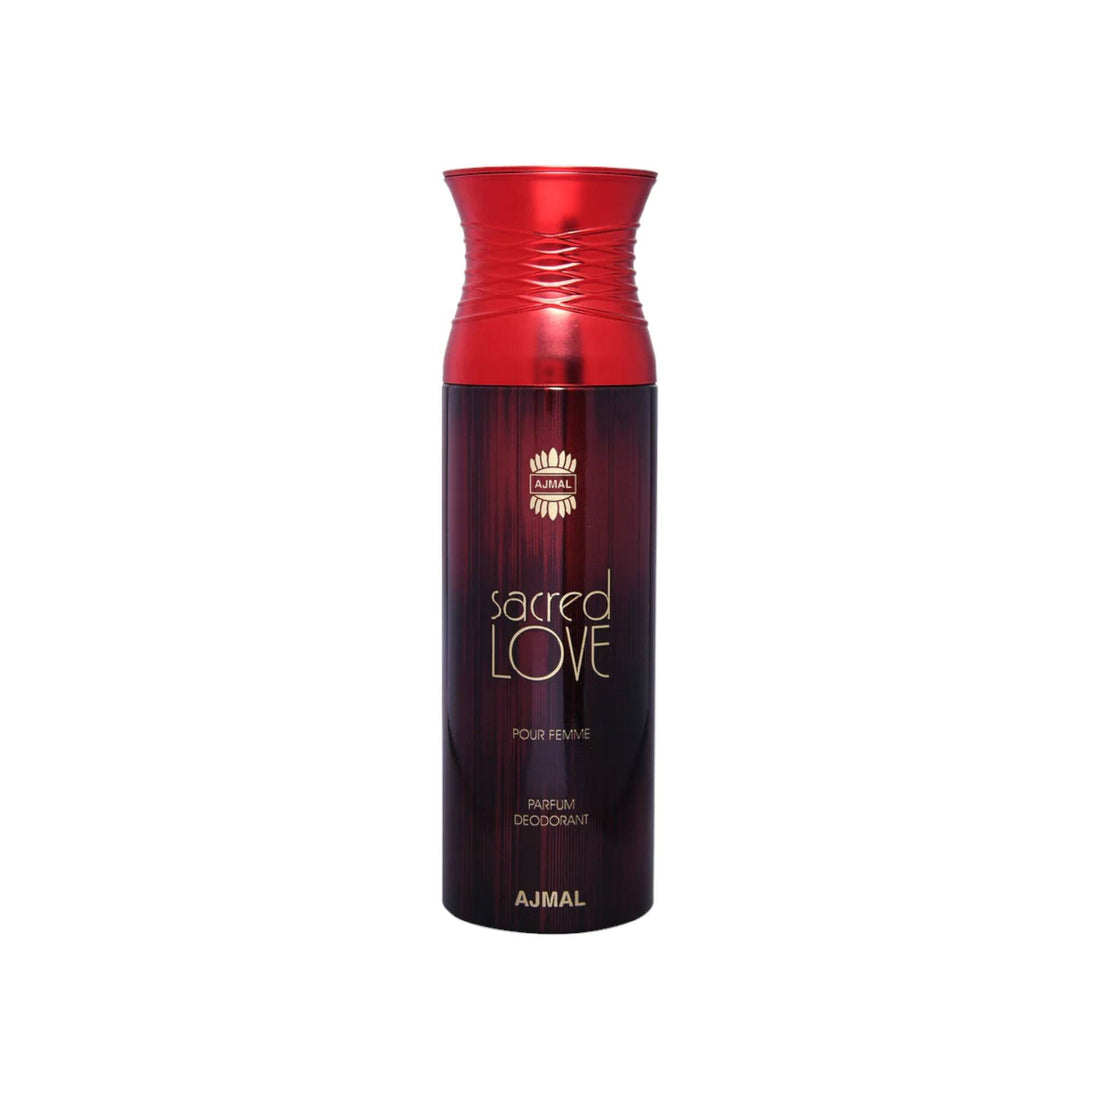 Bottle of Ajmal Sacred Love Deodorant 200ml, elegantly displayed to highlight its refined and feminine design.